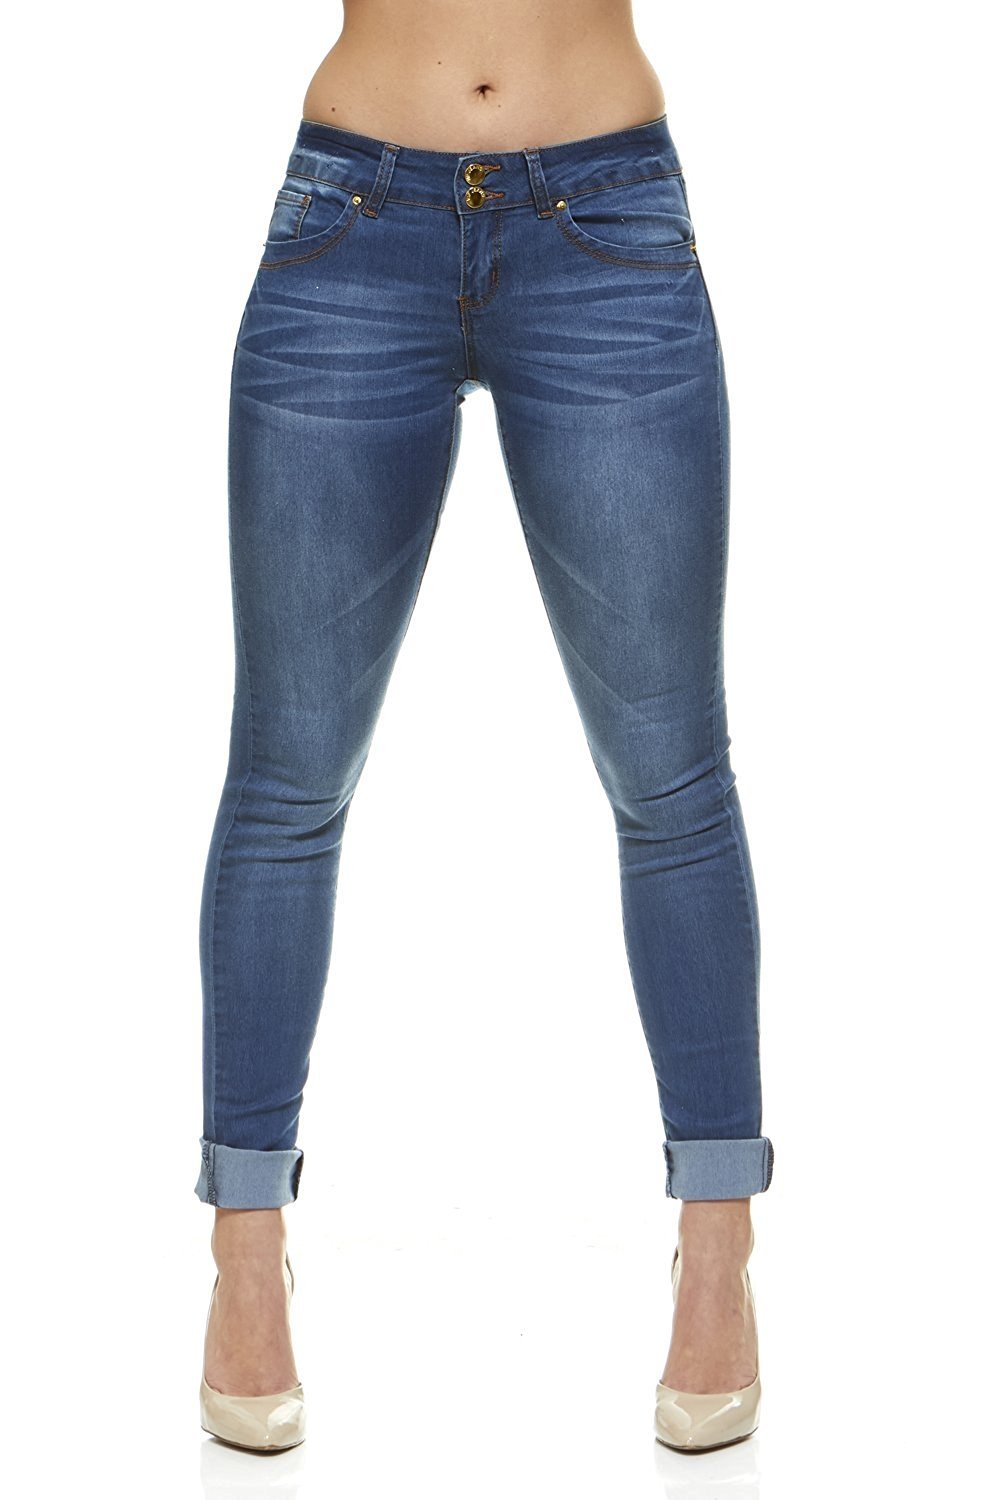 Cute Teen Girl - Skinny Jeans for Teen Girls Acid Washed Slim Fit Five Pocket Blue - image 1 of 6